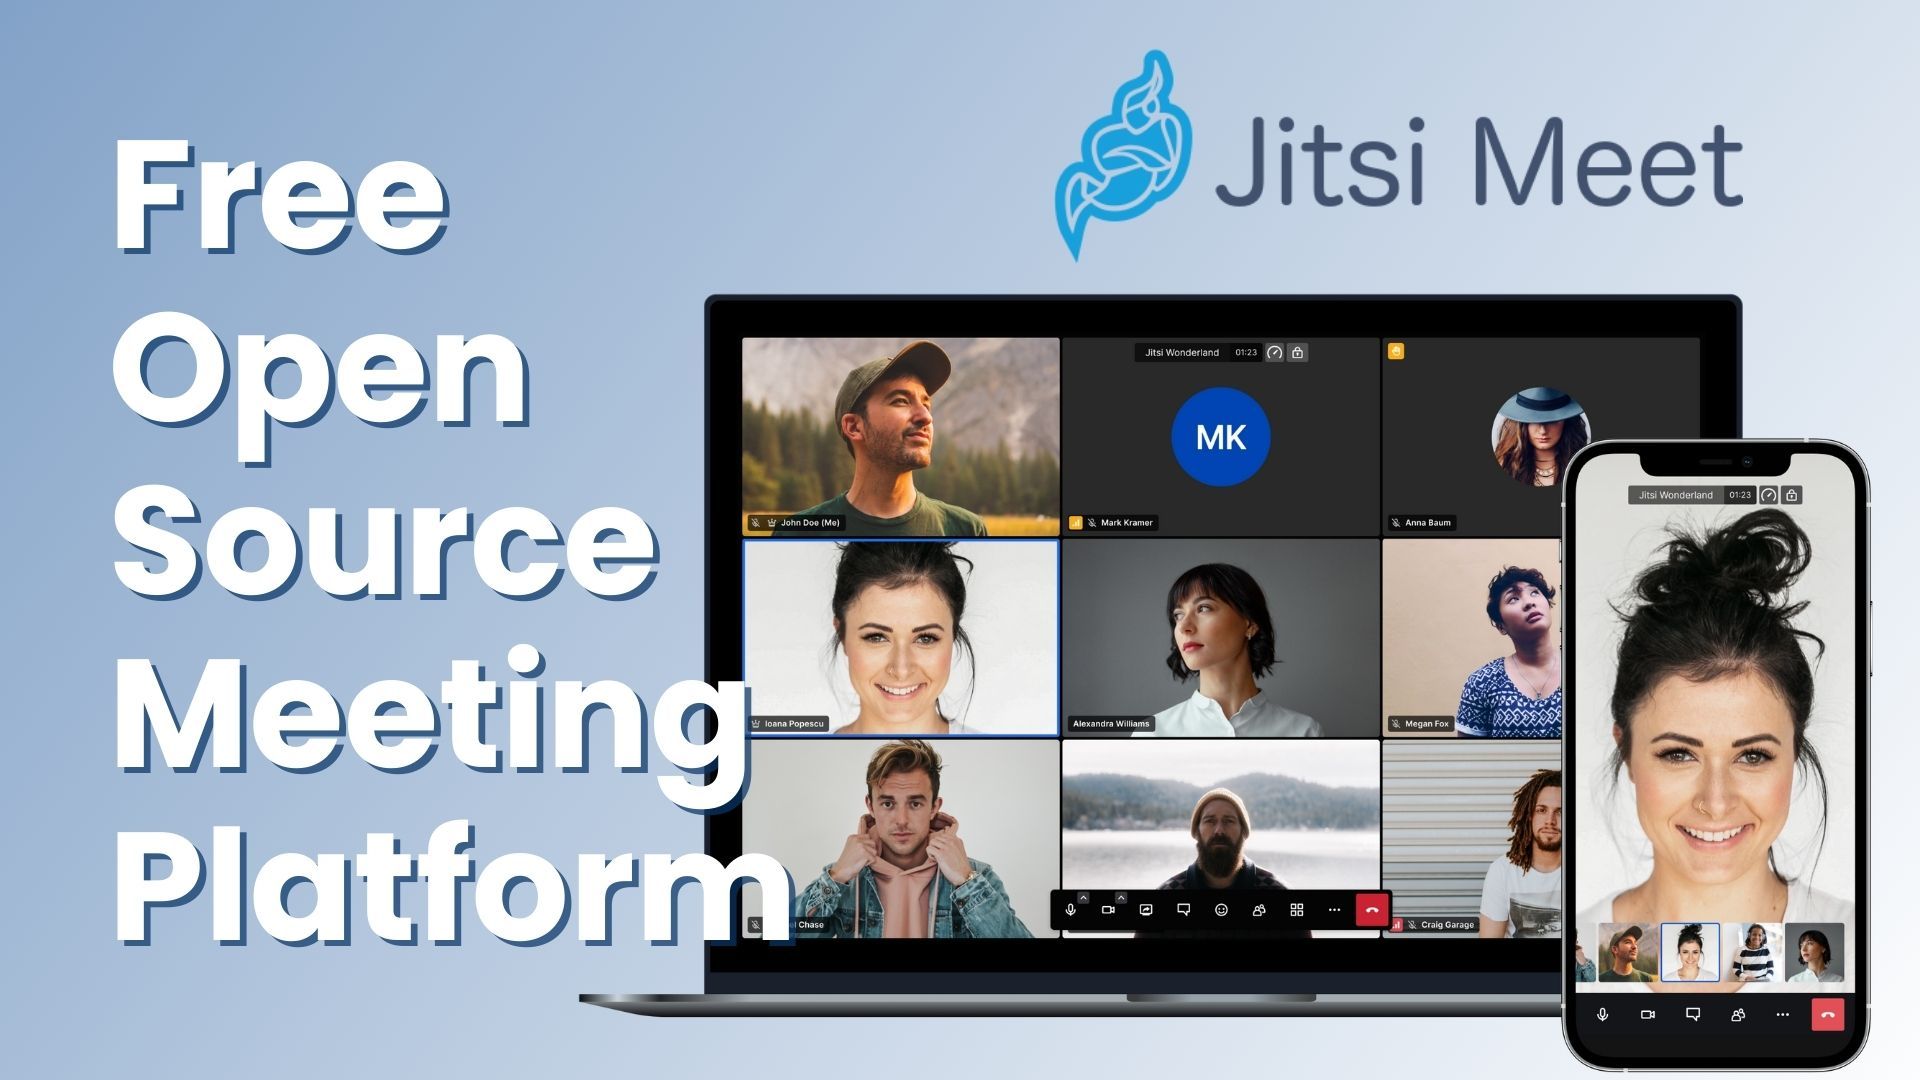 Jitsi Meet: Free Open Source Video Conferencing Platform